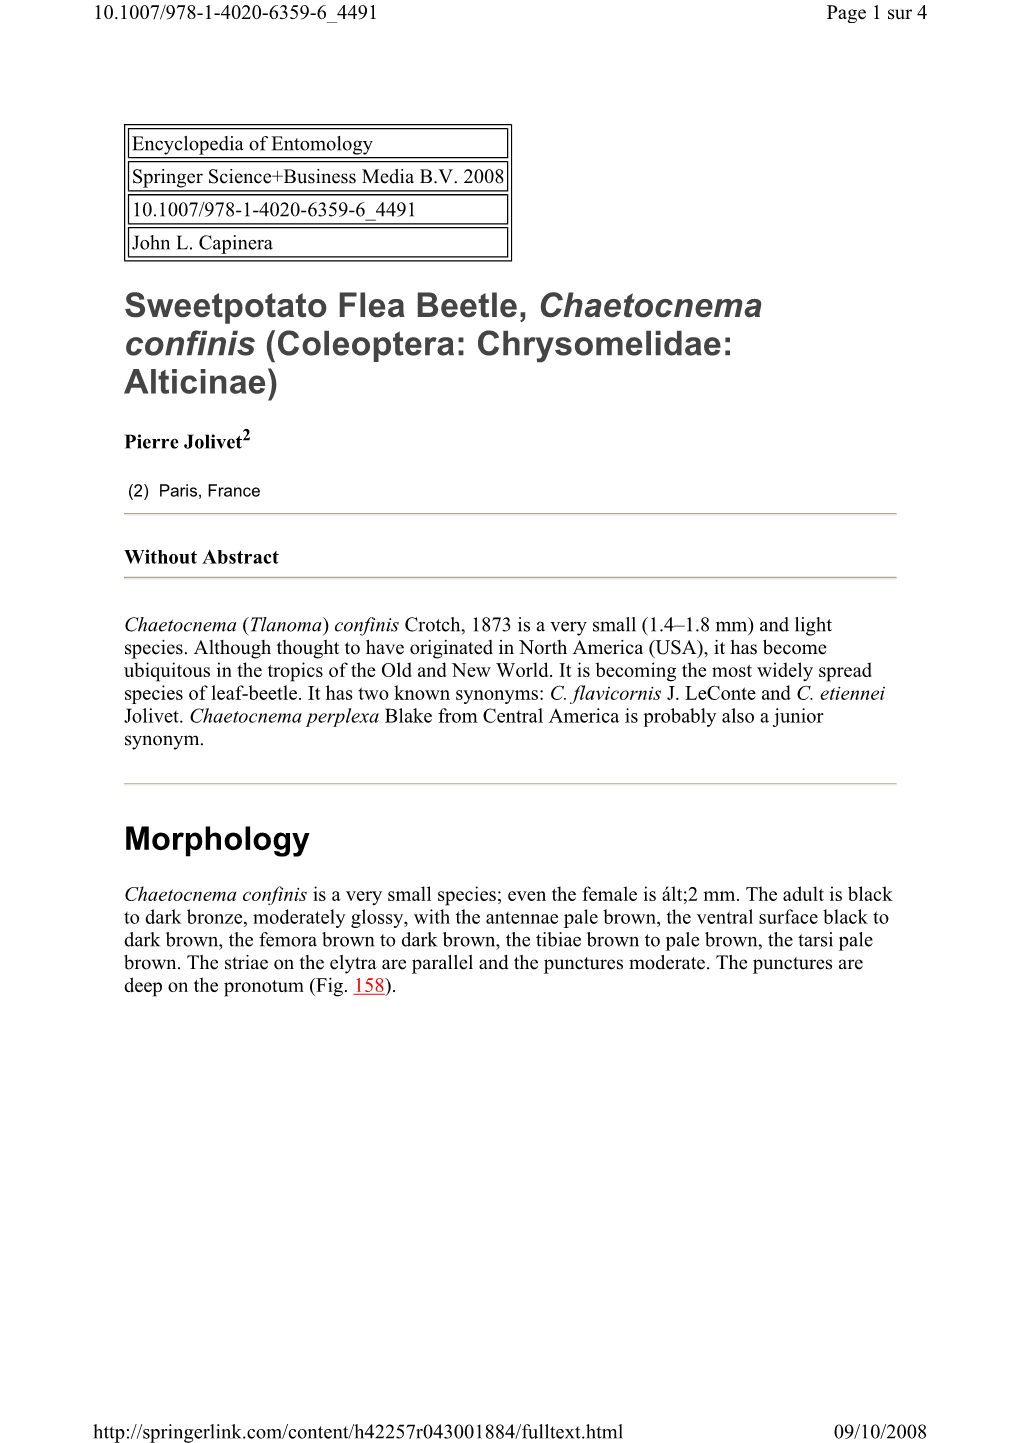 Sweetpotato Flea Beetle, Chaetocnema Confinis (Coleoptera: Chrysomelidae: Alticinae)